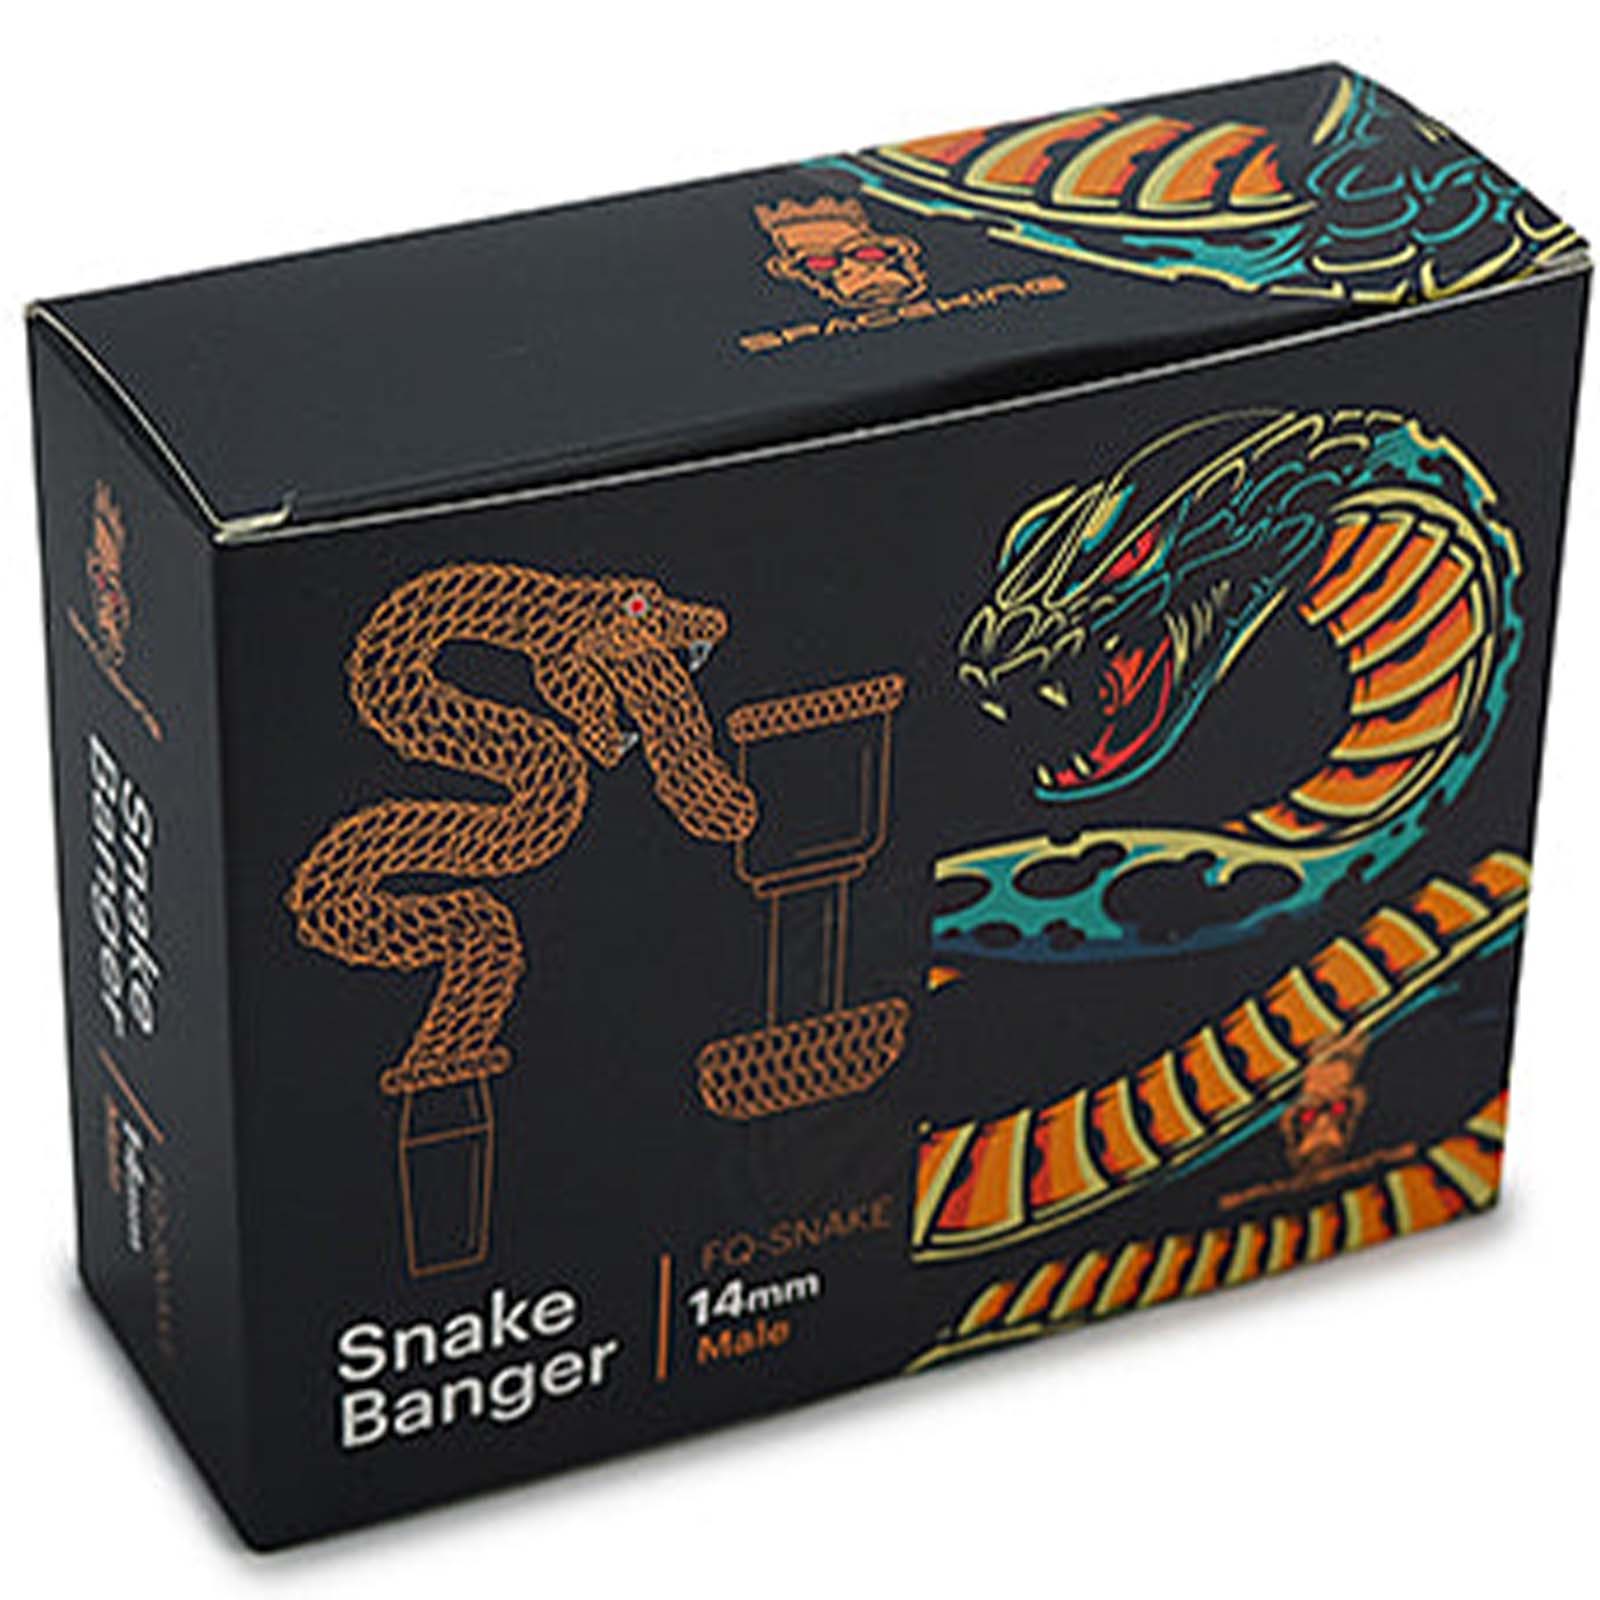 Space King Snake Banger - INHALCO